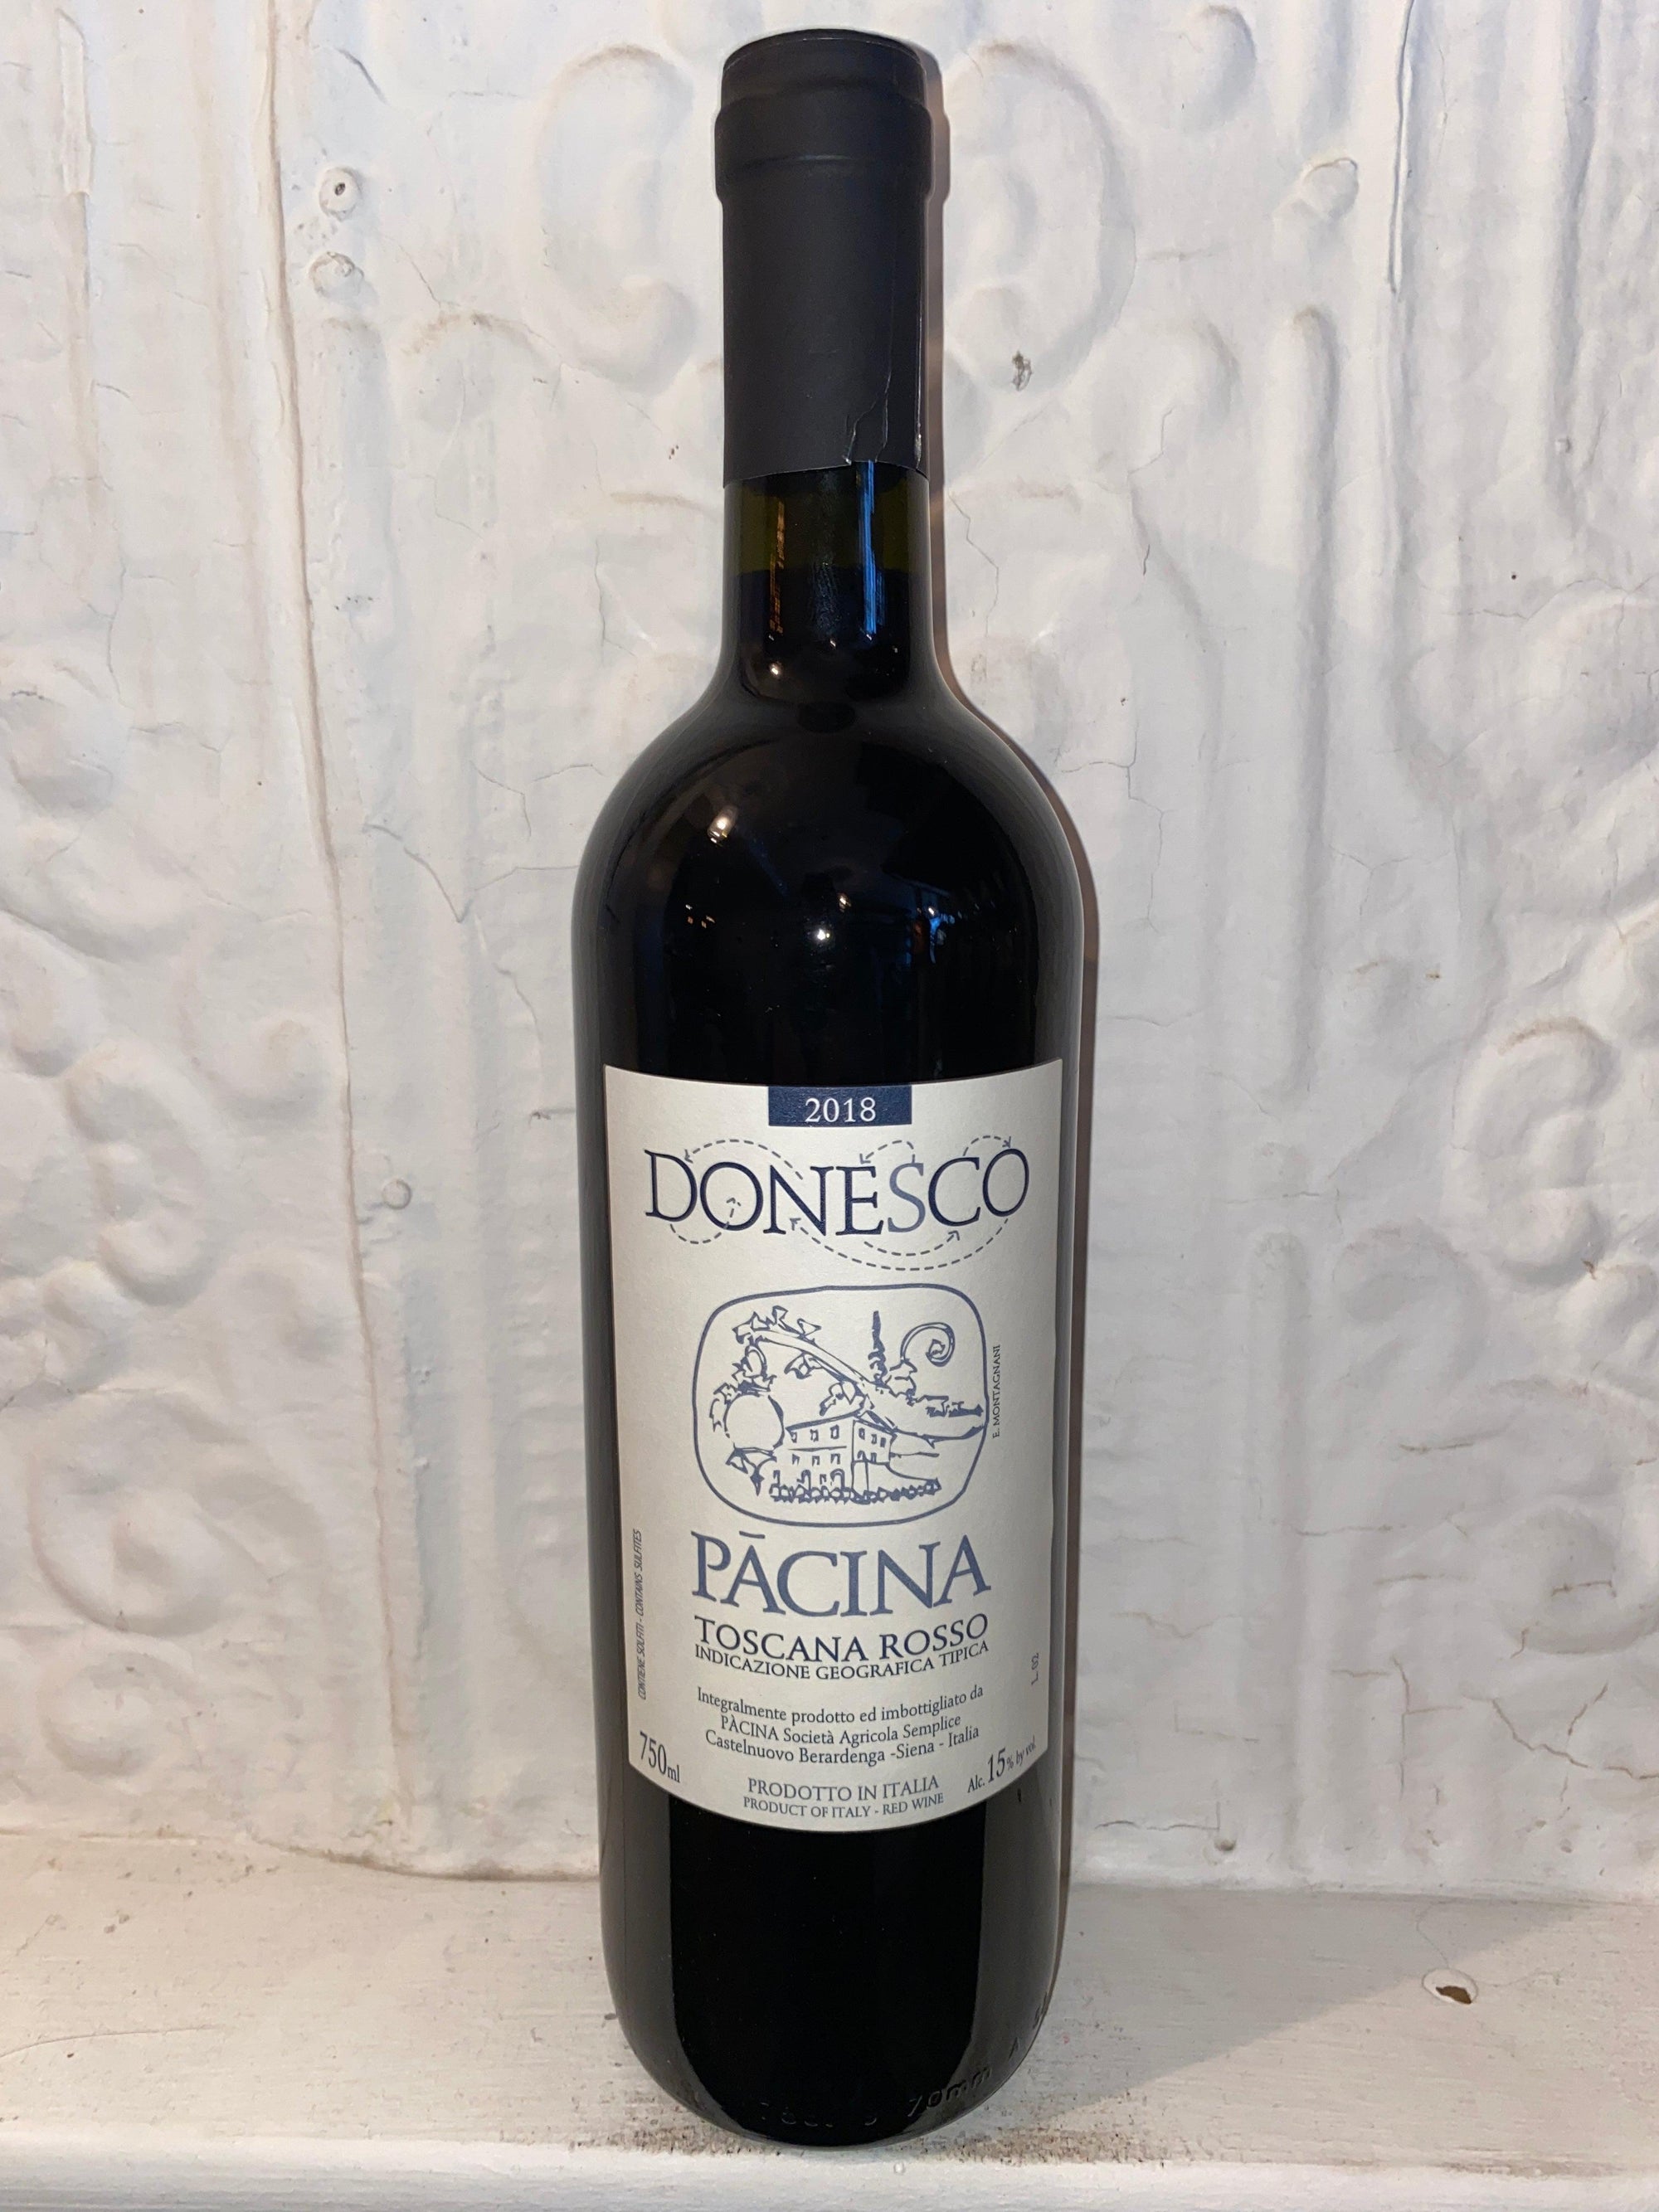 Toscana Rosso "Donesco", Pacina 2018-Wine-Bibber & Bell